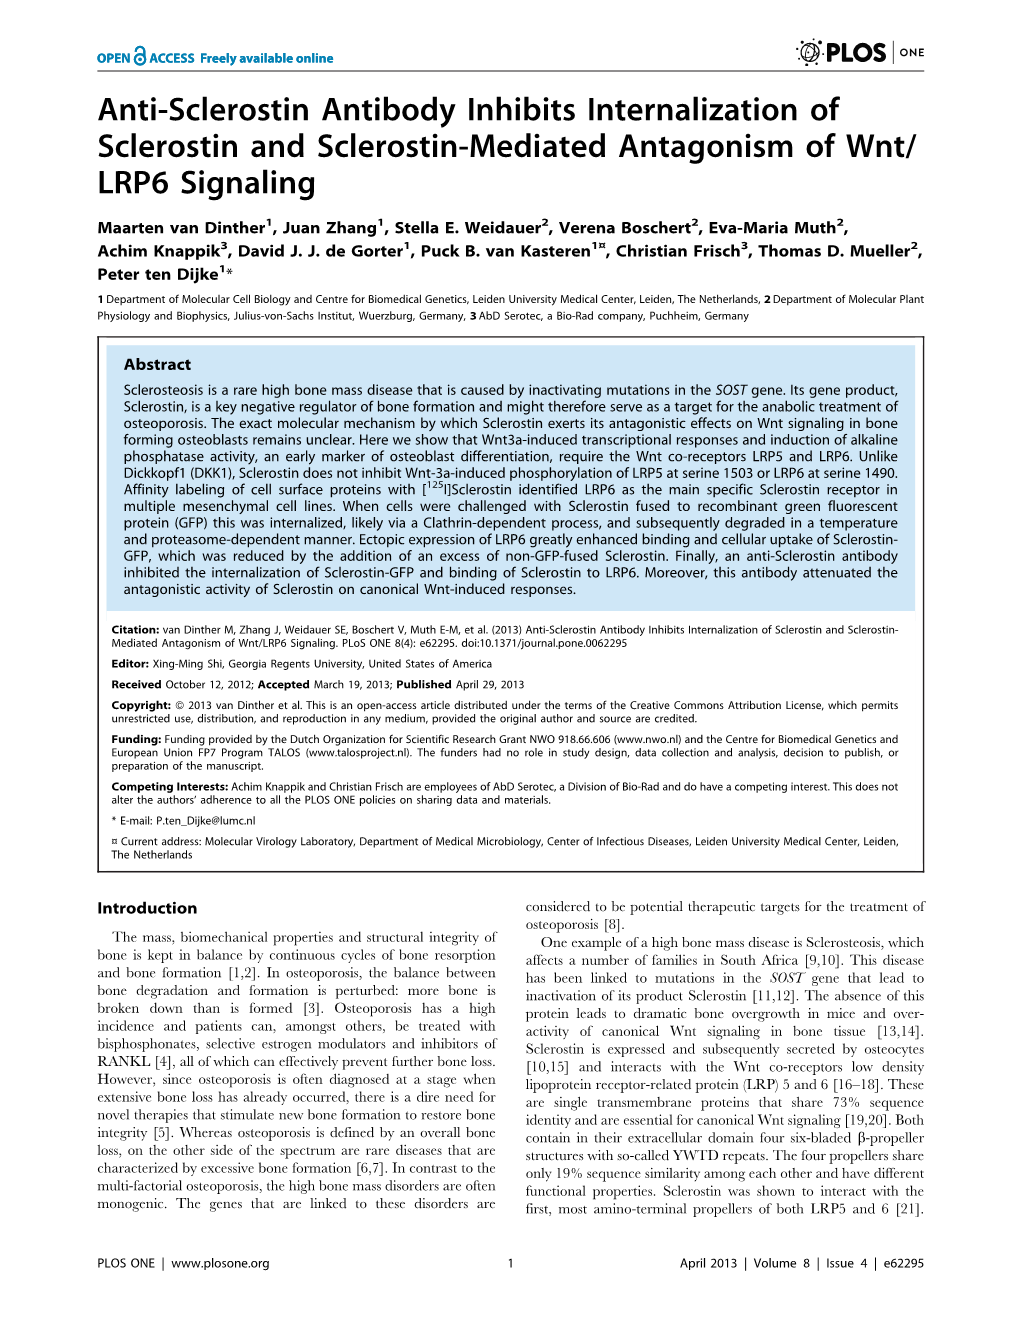 Anti-Sclerostin Antibody Inhibits Internalization of Sclerostin and Sclerostin-Mediated Antagonism of Wnt/ LRP6 Signaling